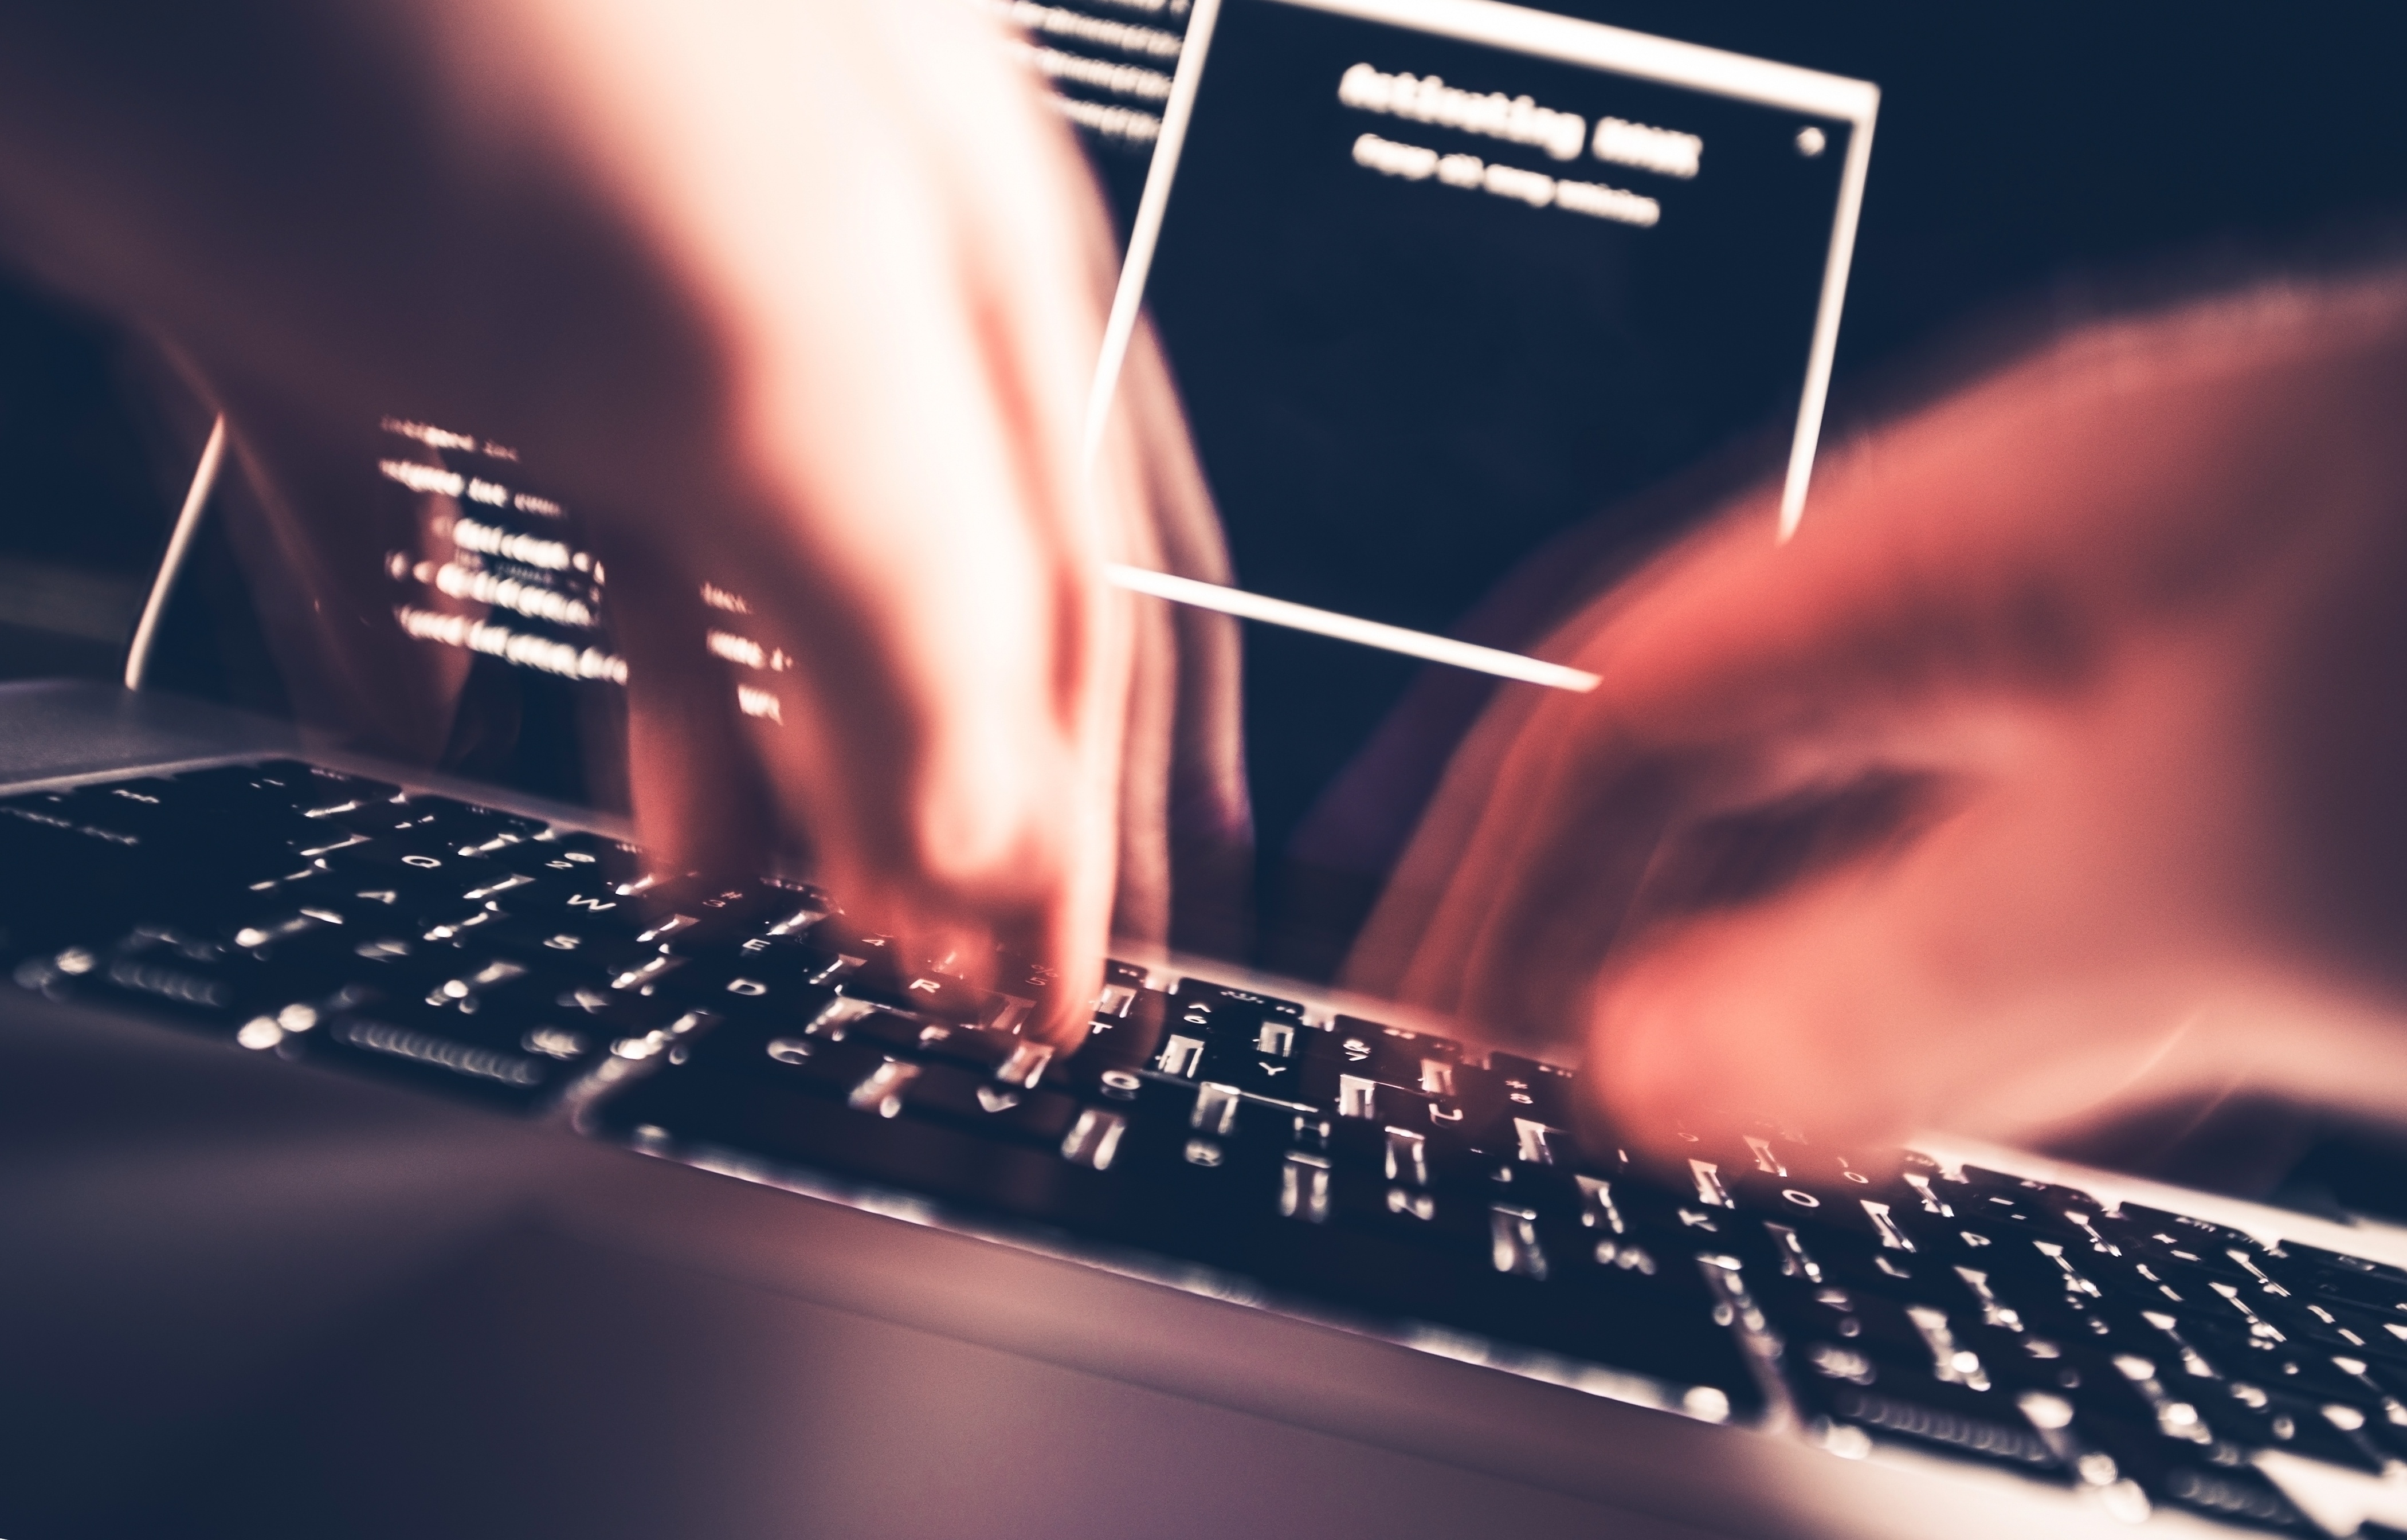 Senate Passes Cybersecurity Bill, More Effort Needed